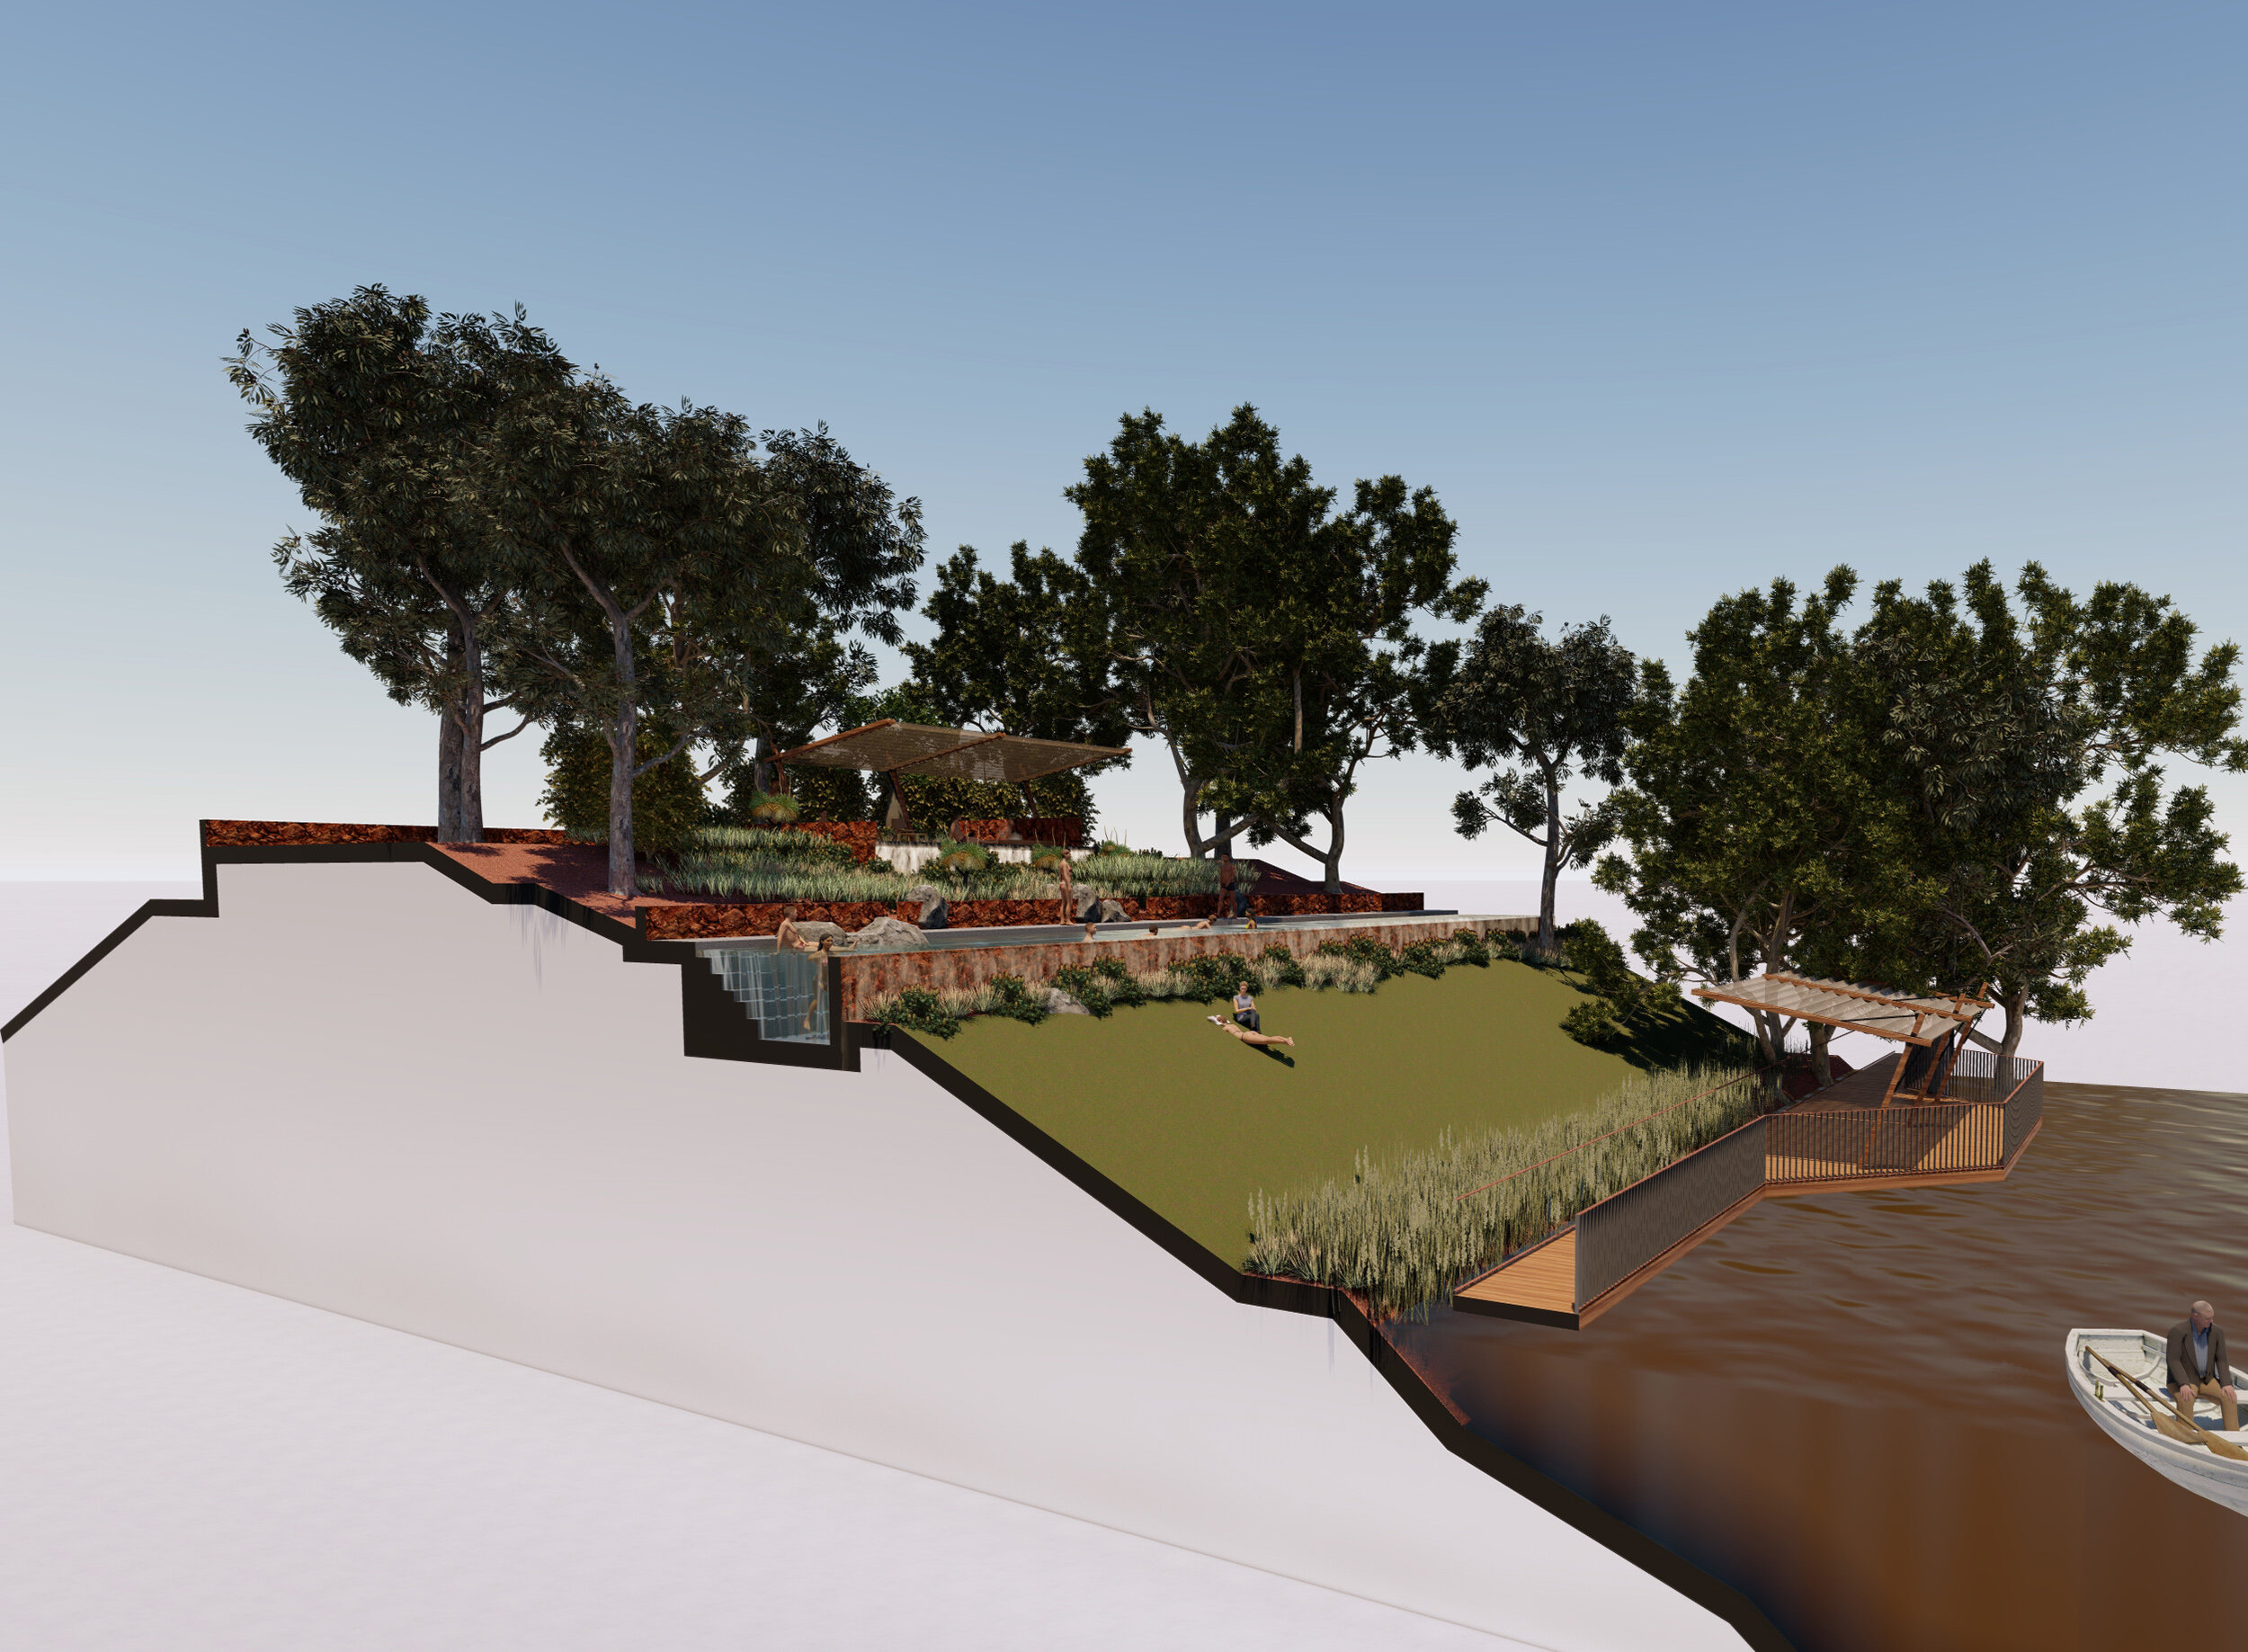 Cunnamulla Hot Springs & Riverwalk — Archipelago | Cities - People - Design